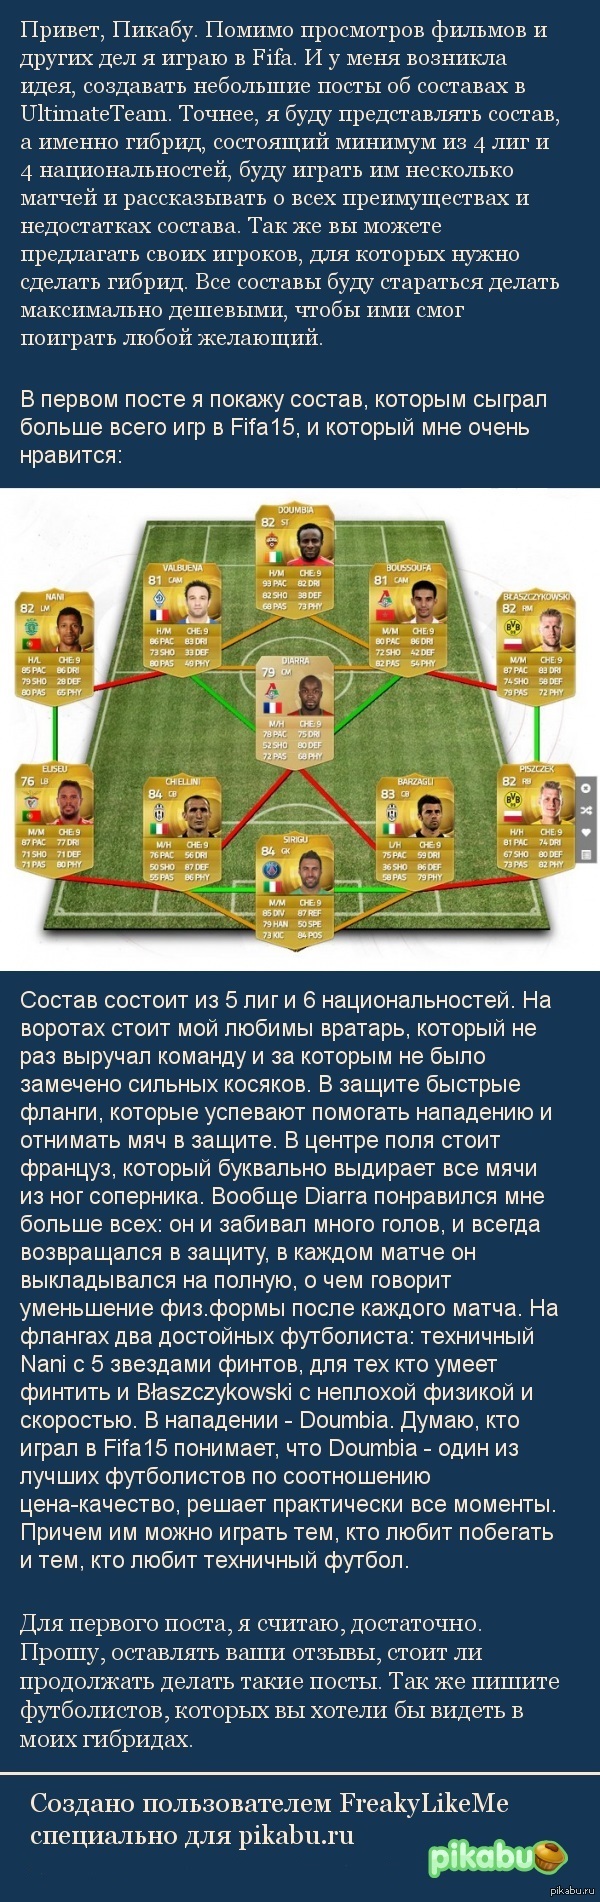   Fifa15 UltimateTeam [1]      ,     .